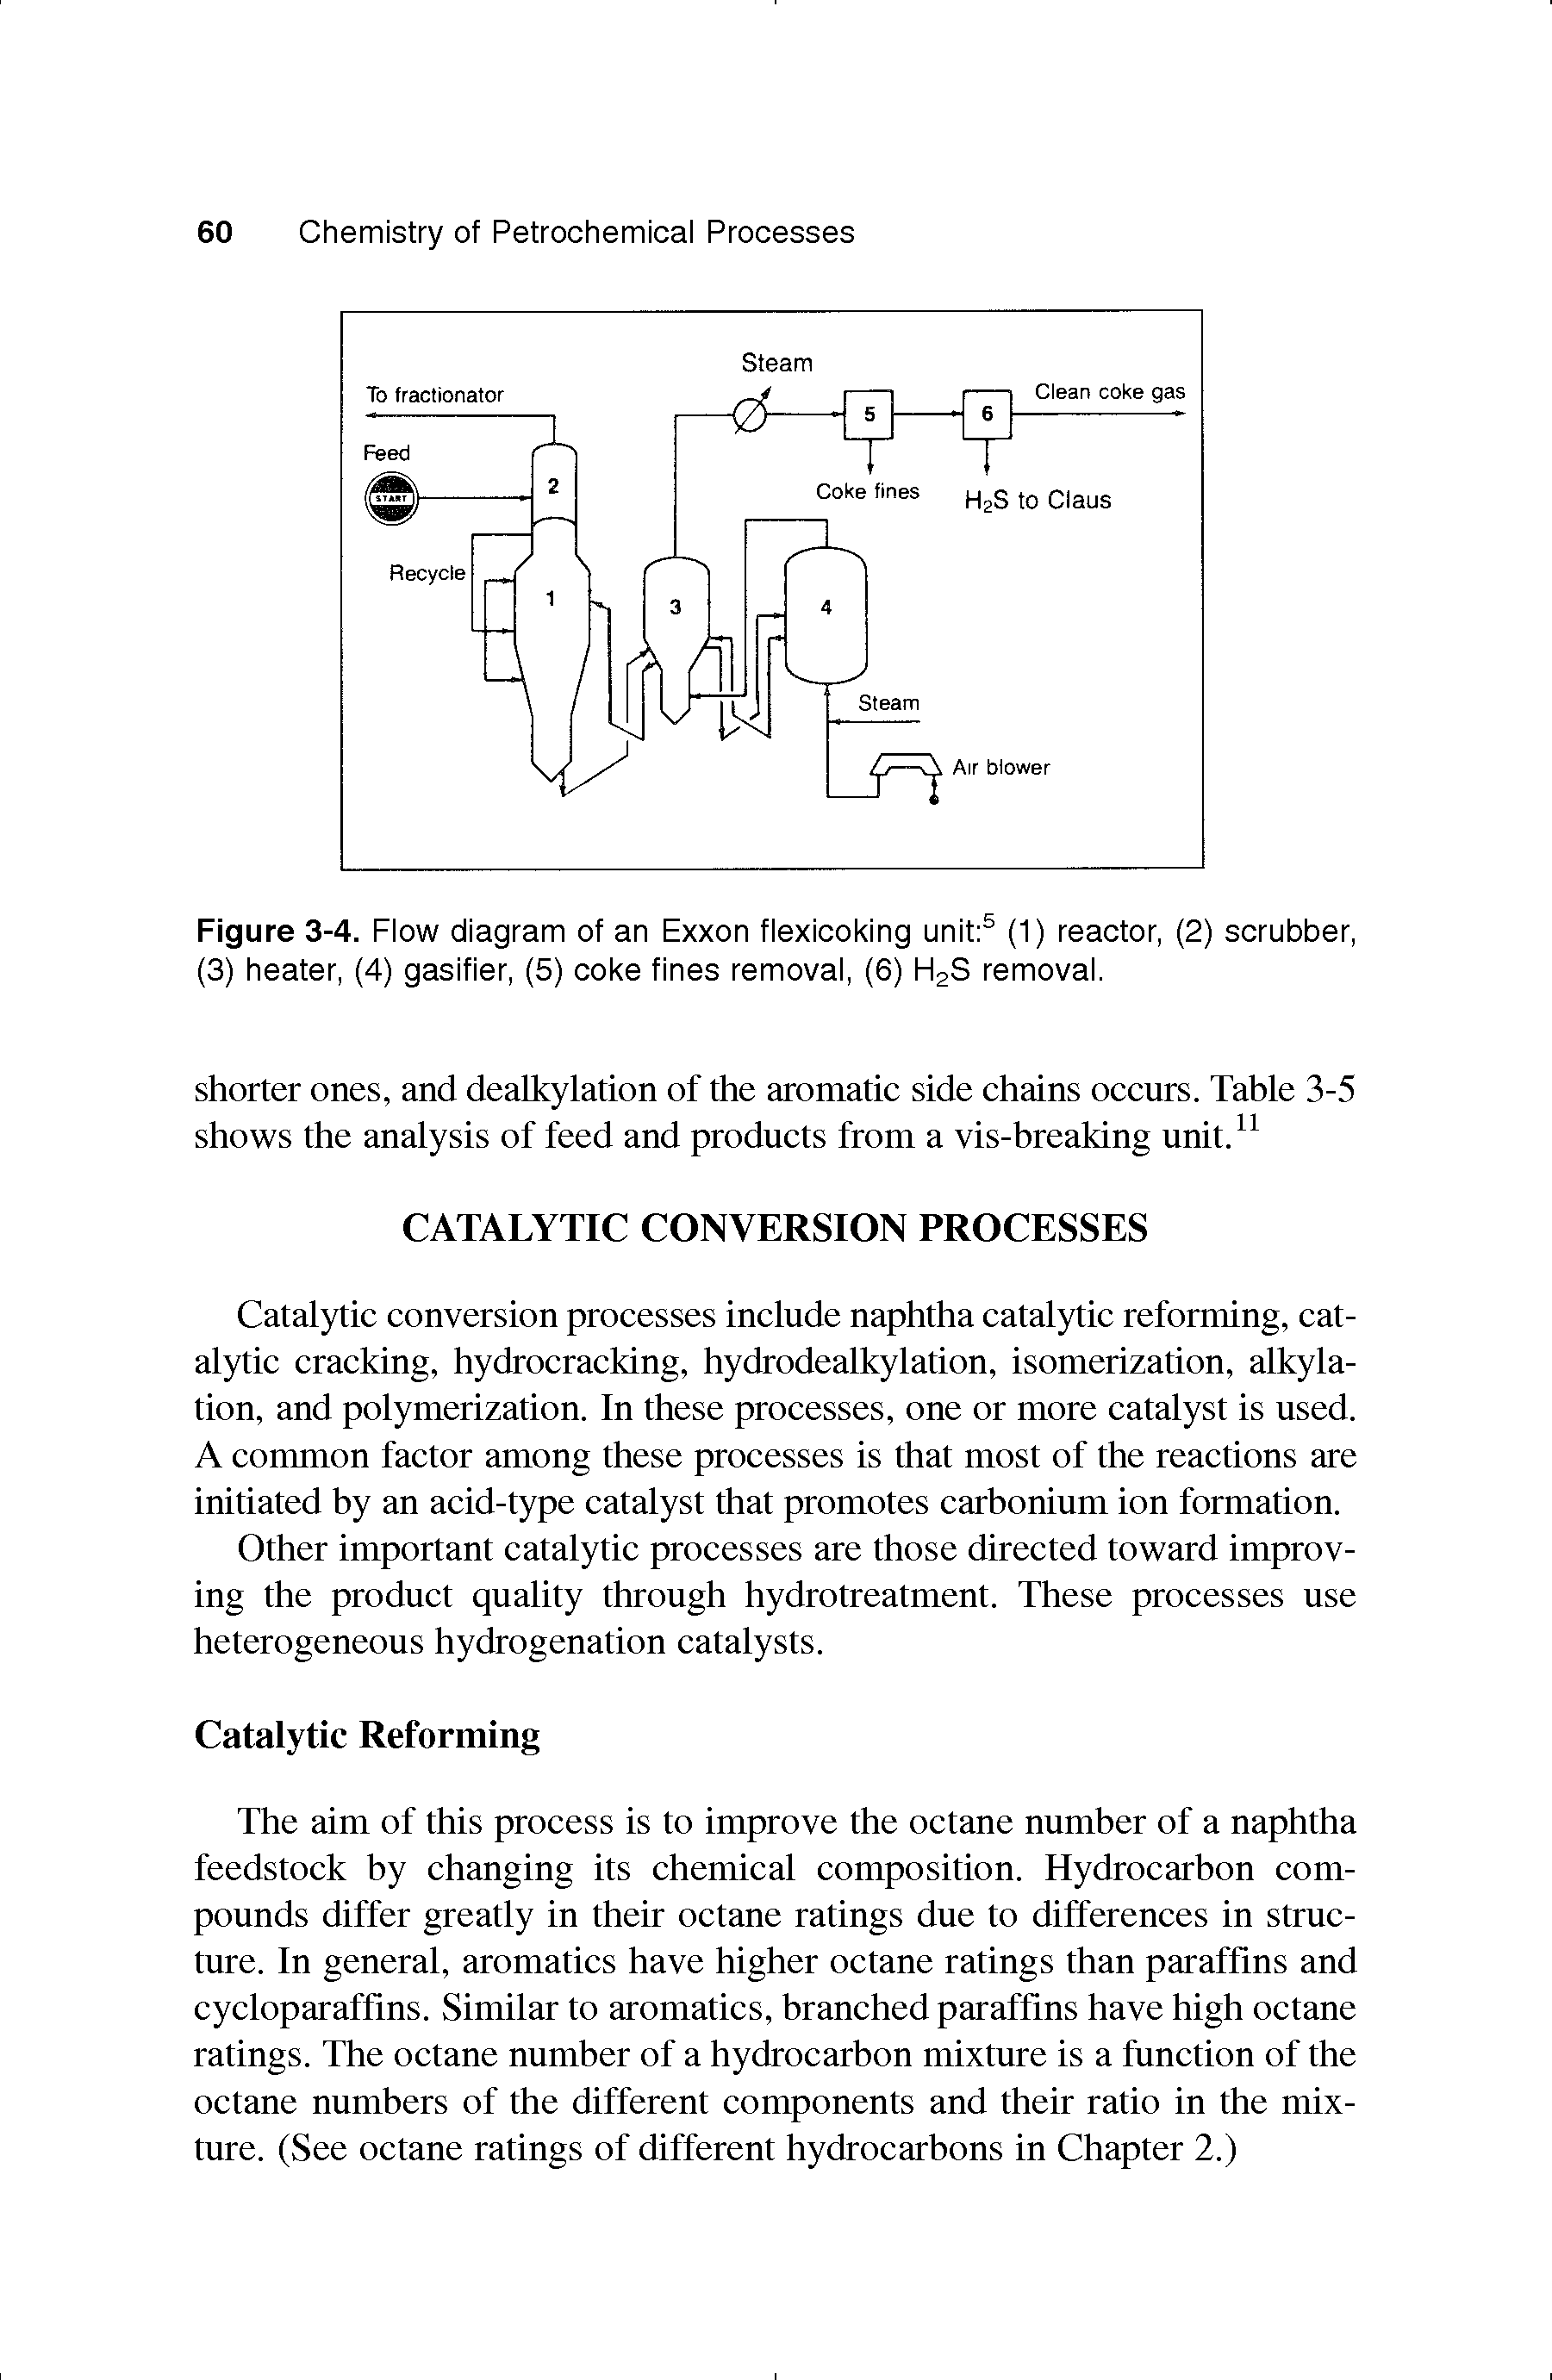 Figure 3-4. Flow diagram of an Exxon flexicoking unit (1) reactor, (2) scrubber, (3) heater, (4) gasifier, (5) coke fines removal, (6) HgS removal.